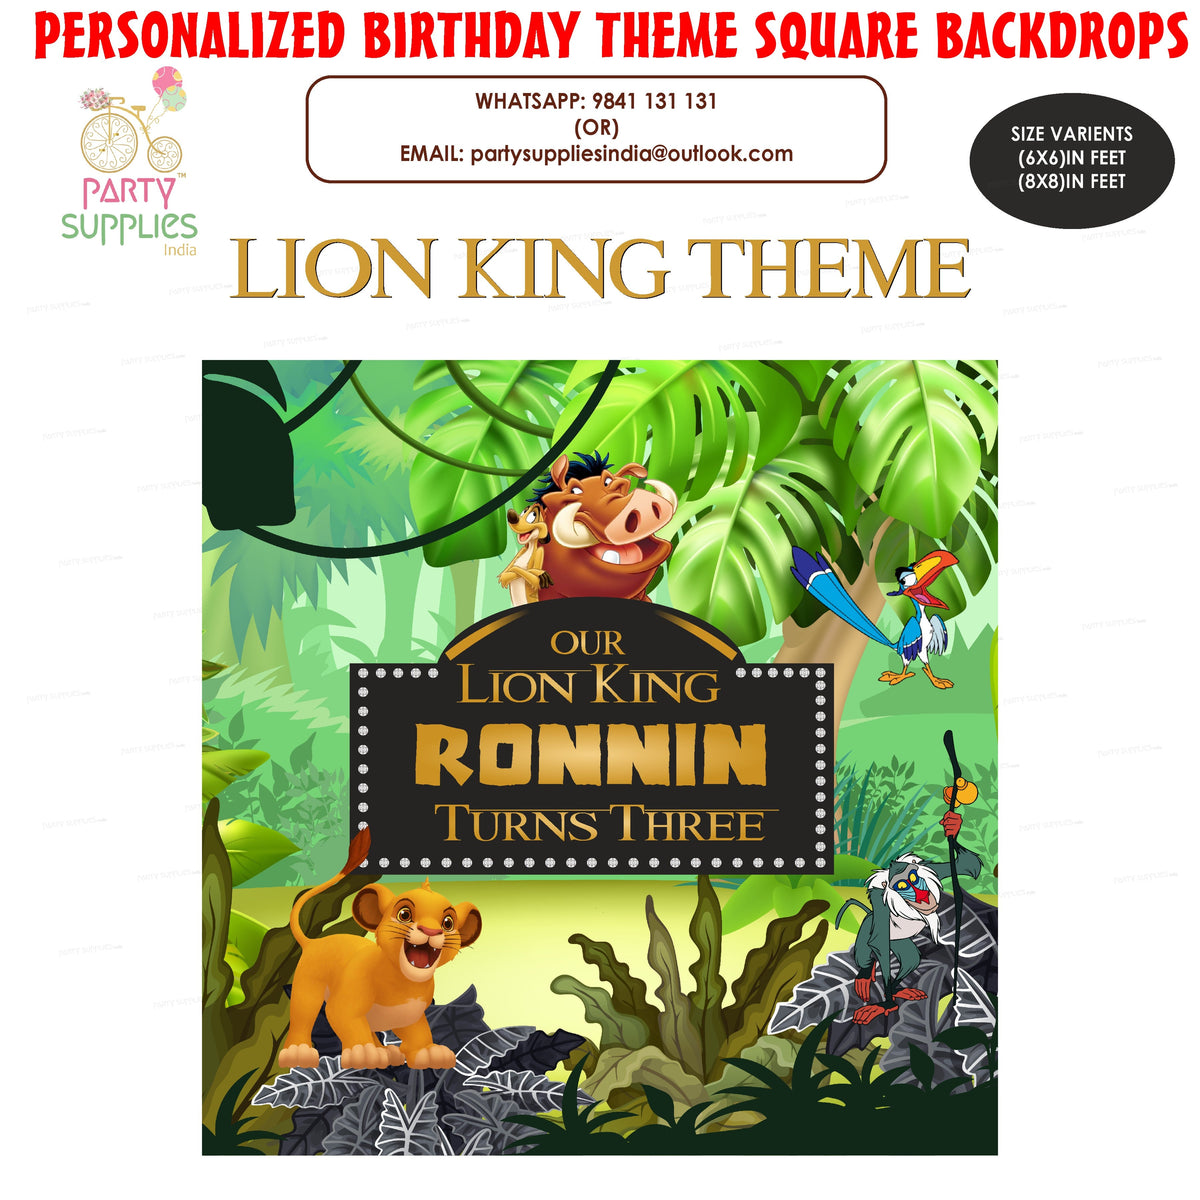 Lion King Theme Customized Square Backdrop